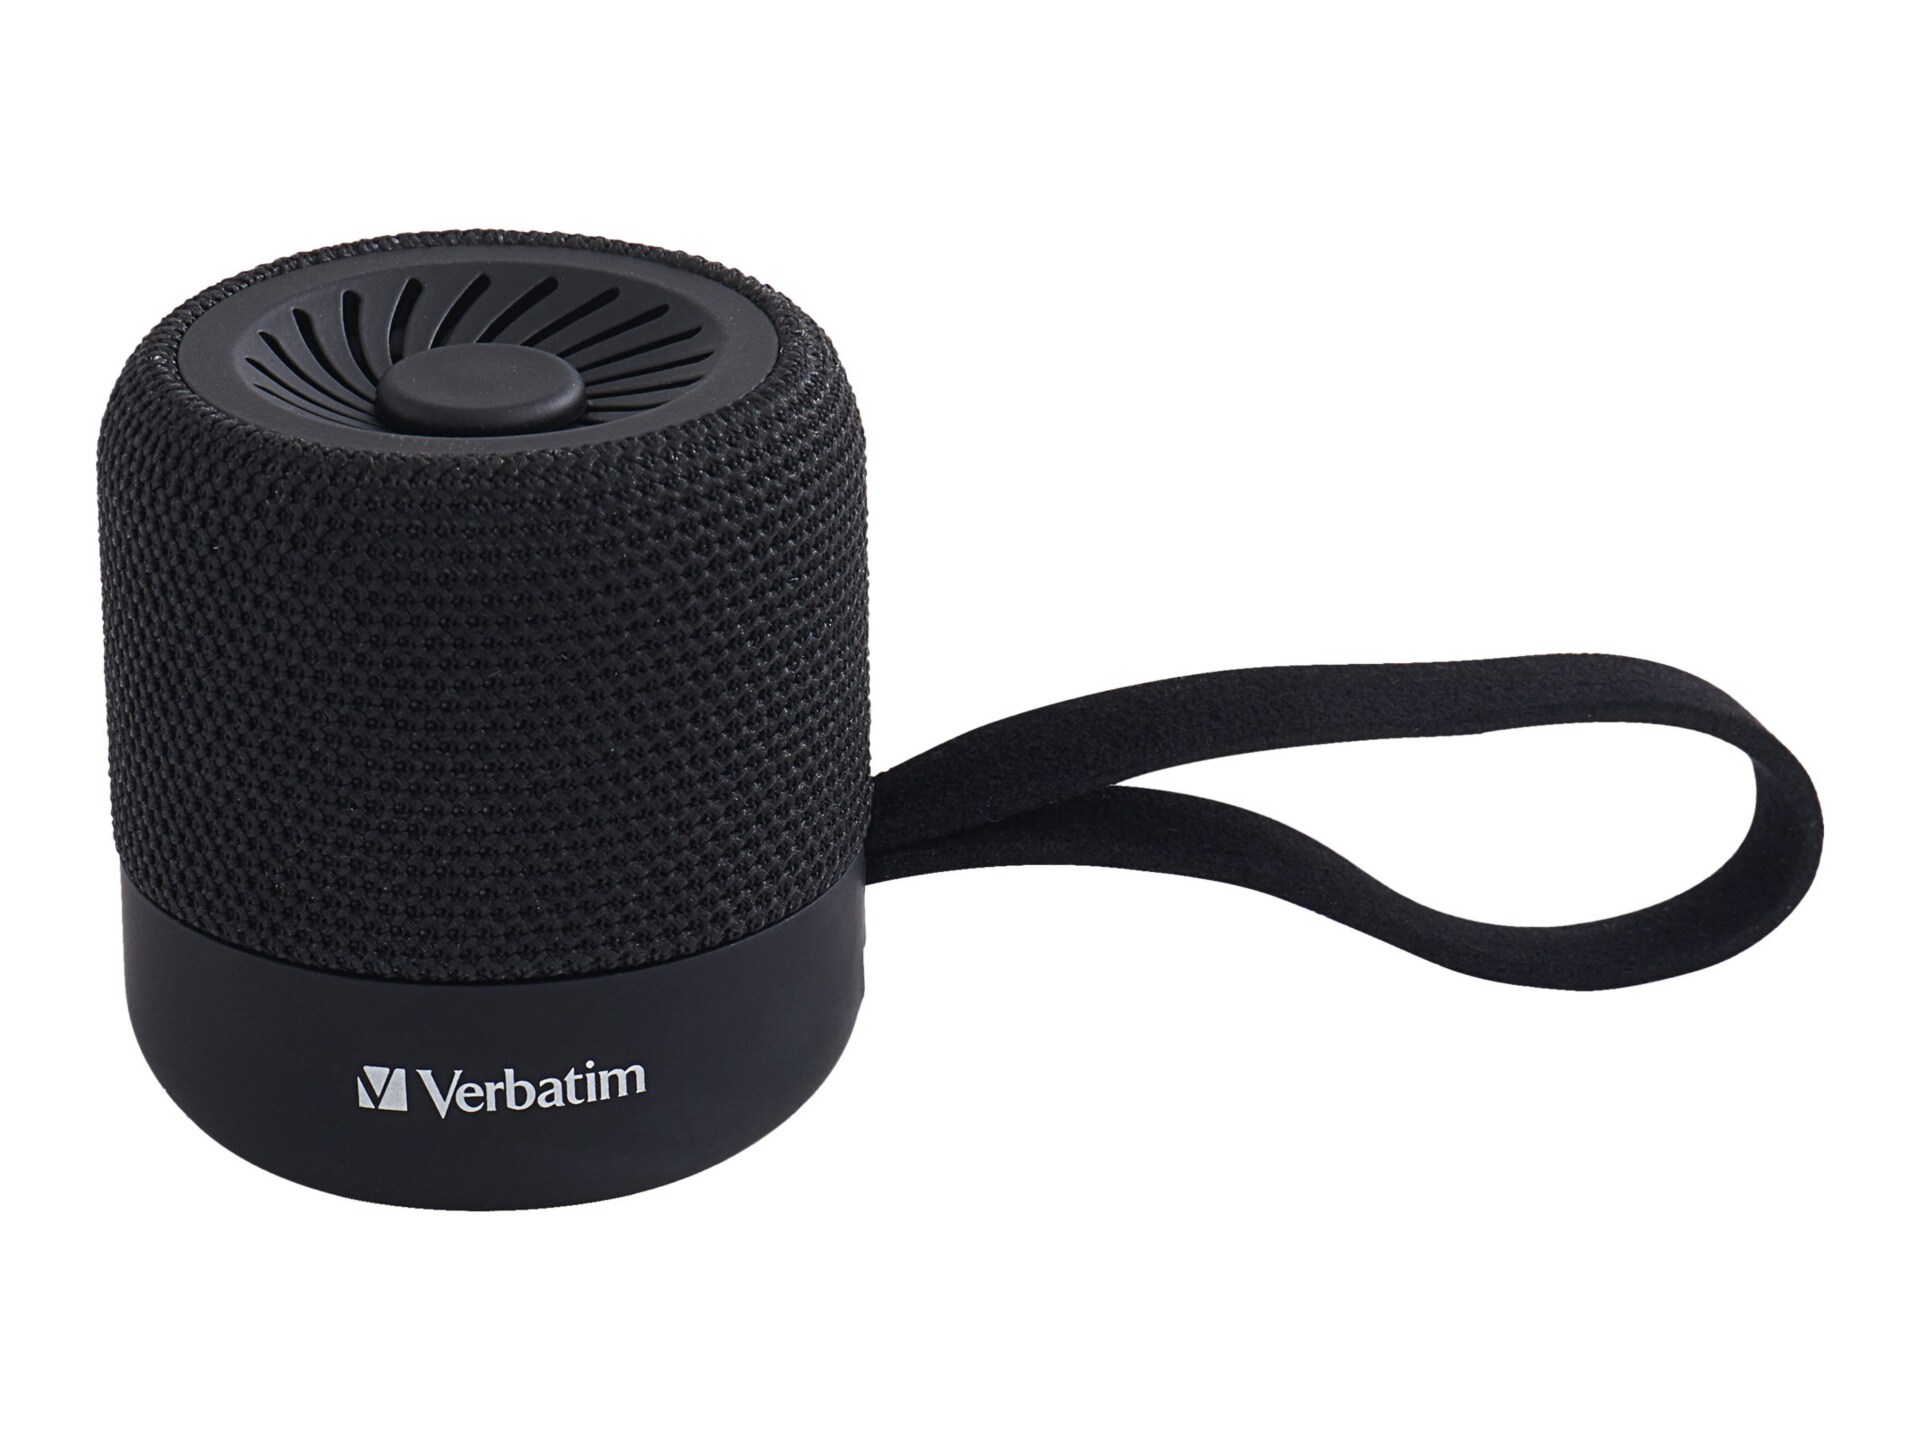 Verbatim Wireless Mini Bluetooth Speaker - haut-parleur - pour utilisation mobile